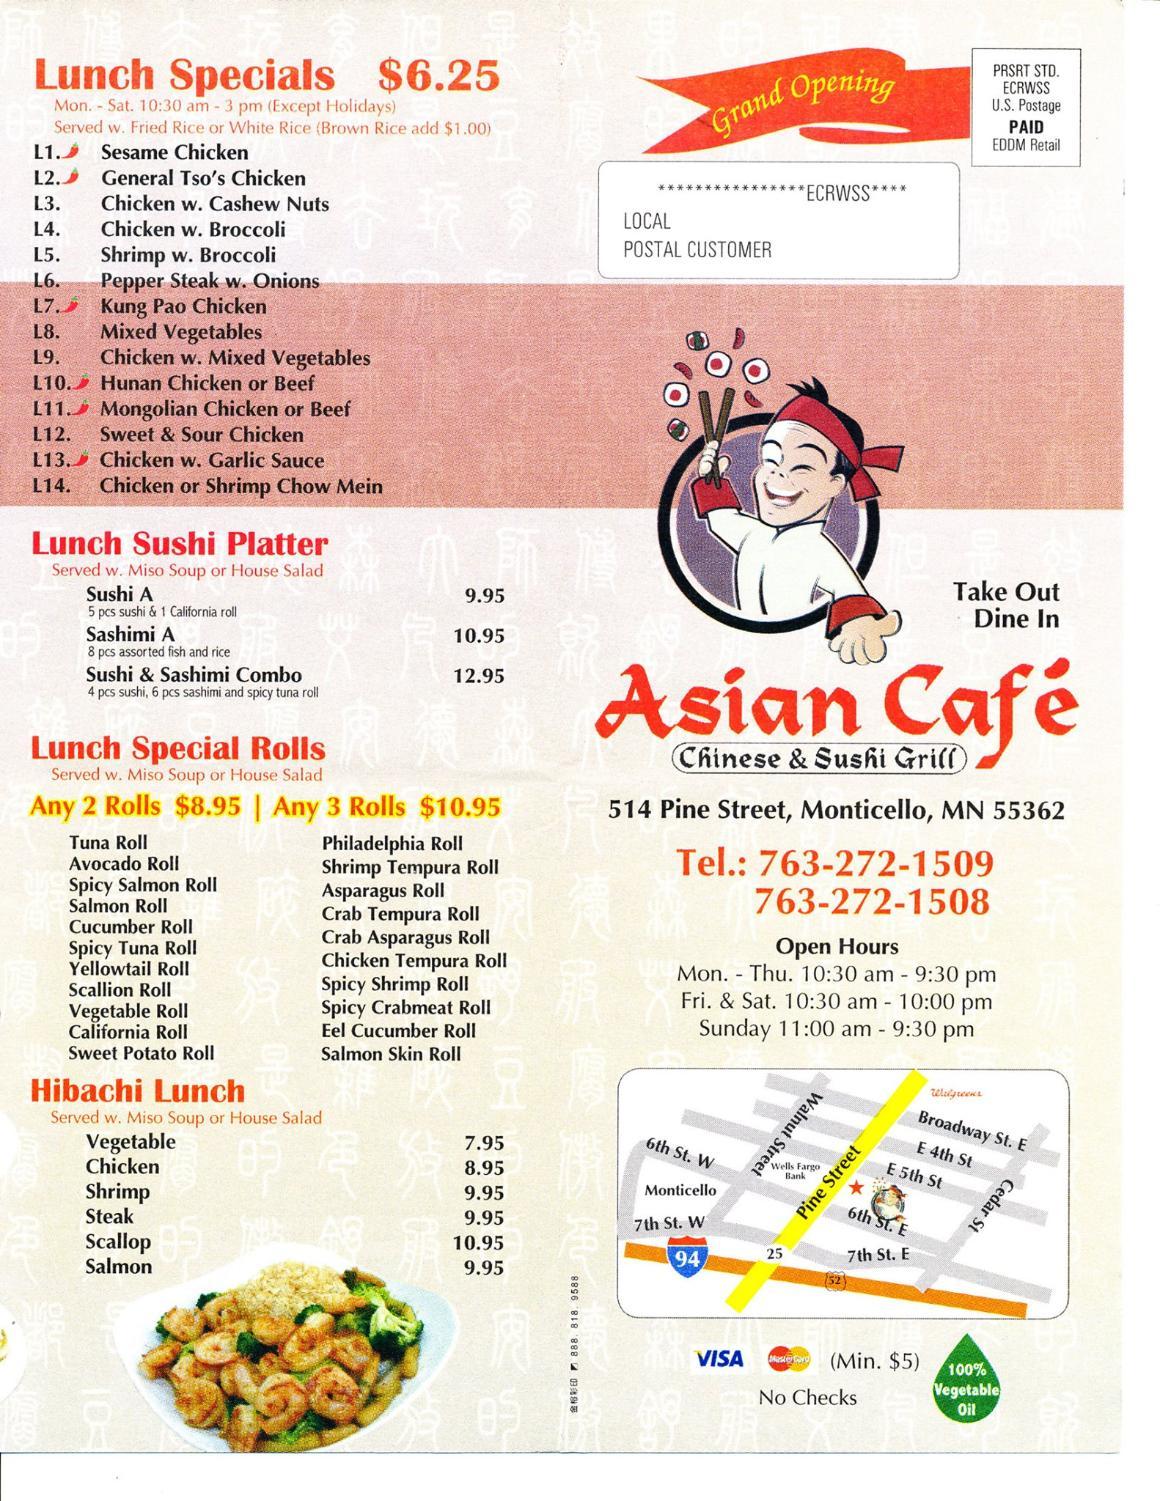 Twix reccomend Asian cafe menu